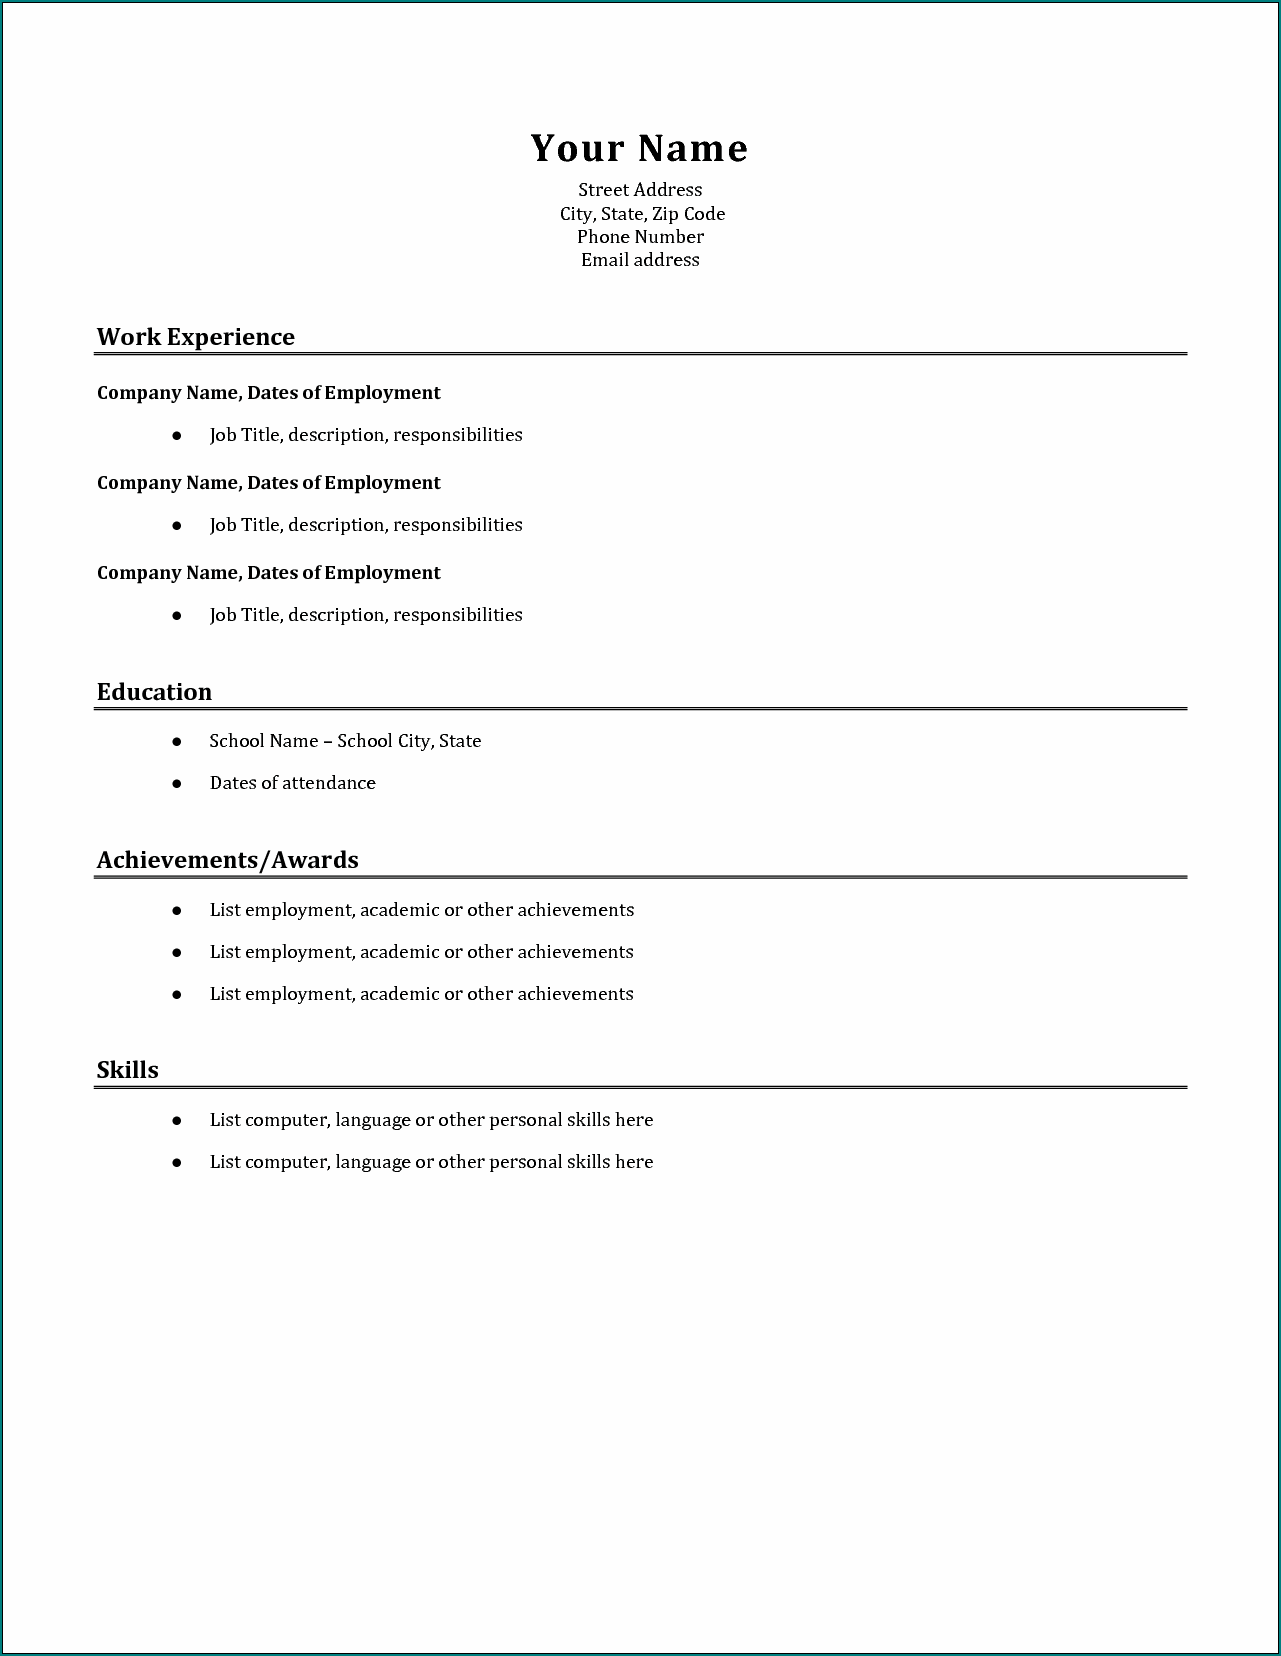 Sample of Easy Resume Template